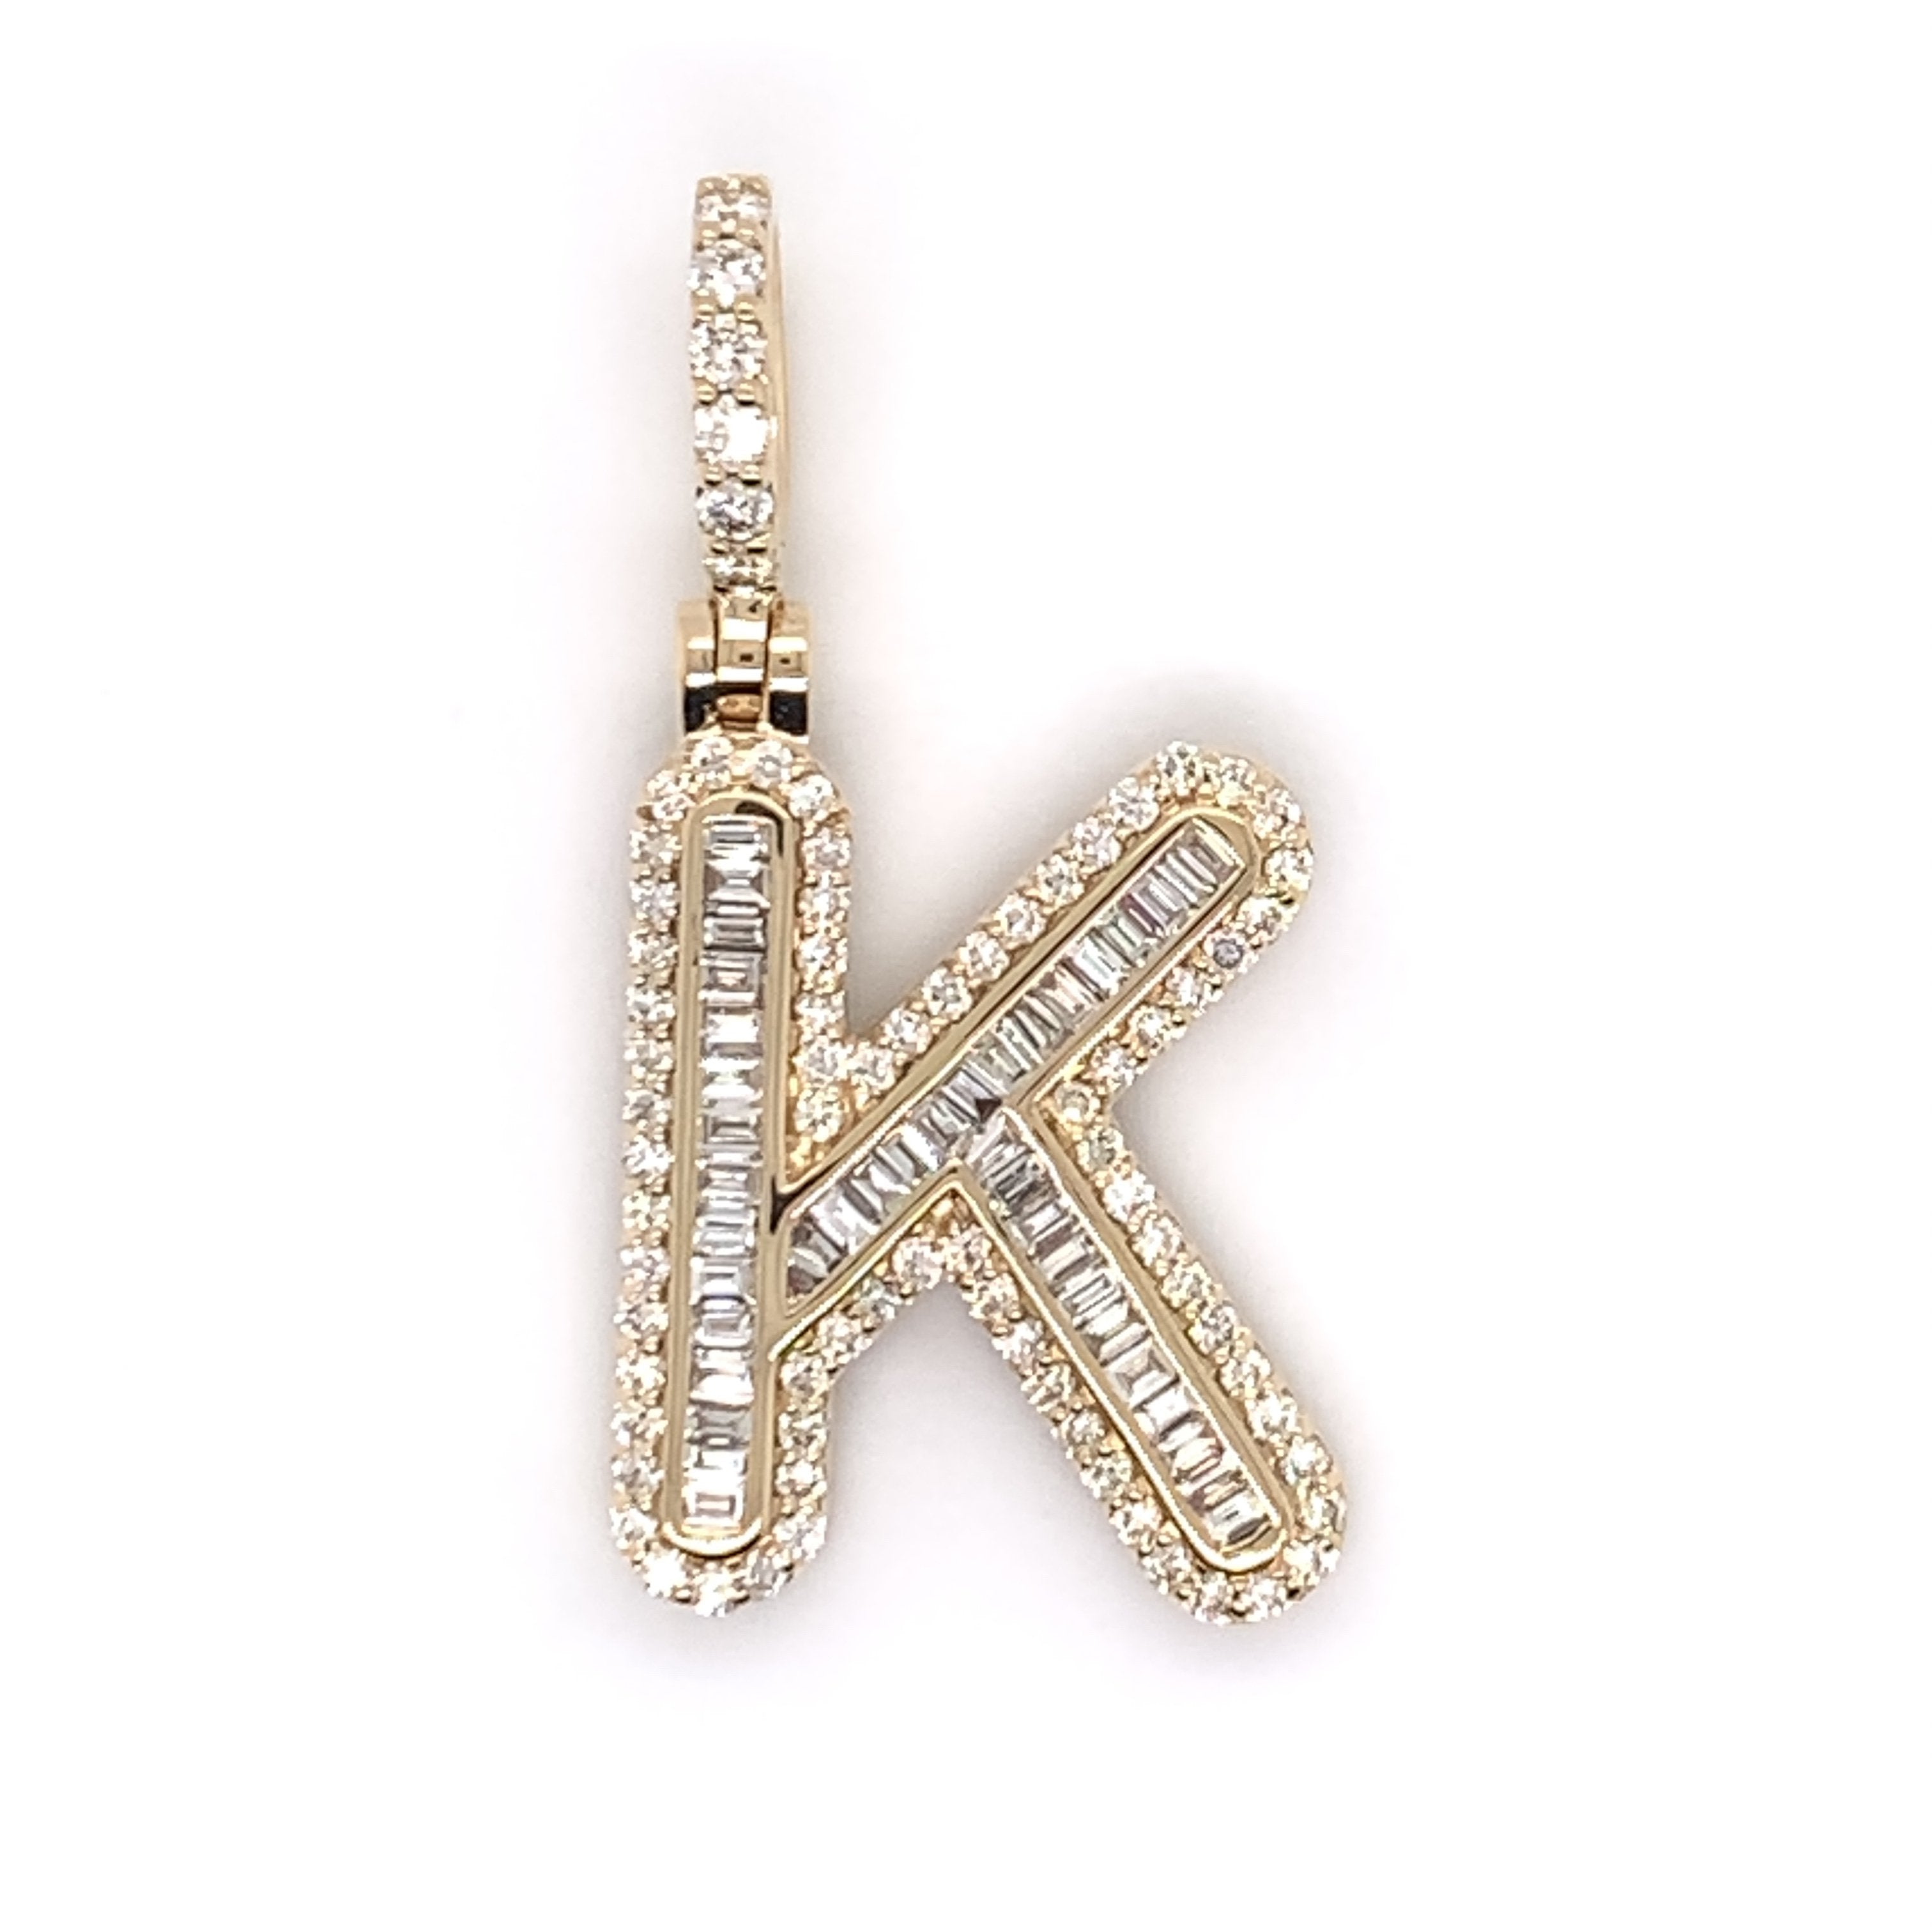 1.00 CT. Diamond Baguette Letter "K" Pendant in 10K Gold - White Carat - USA & Canada